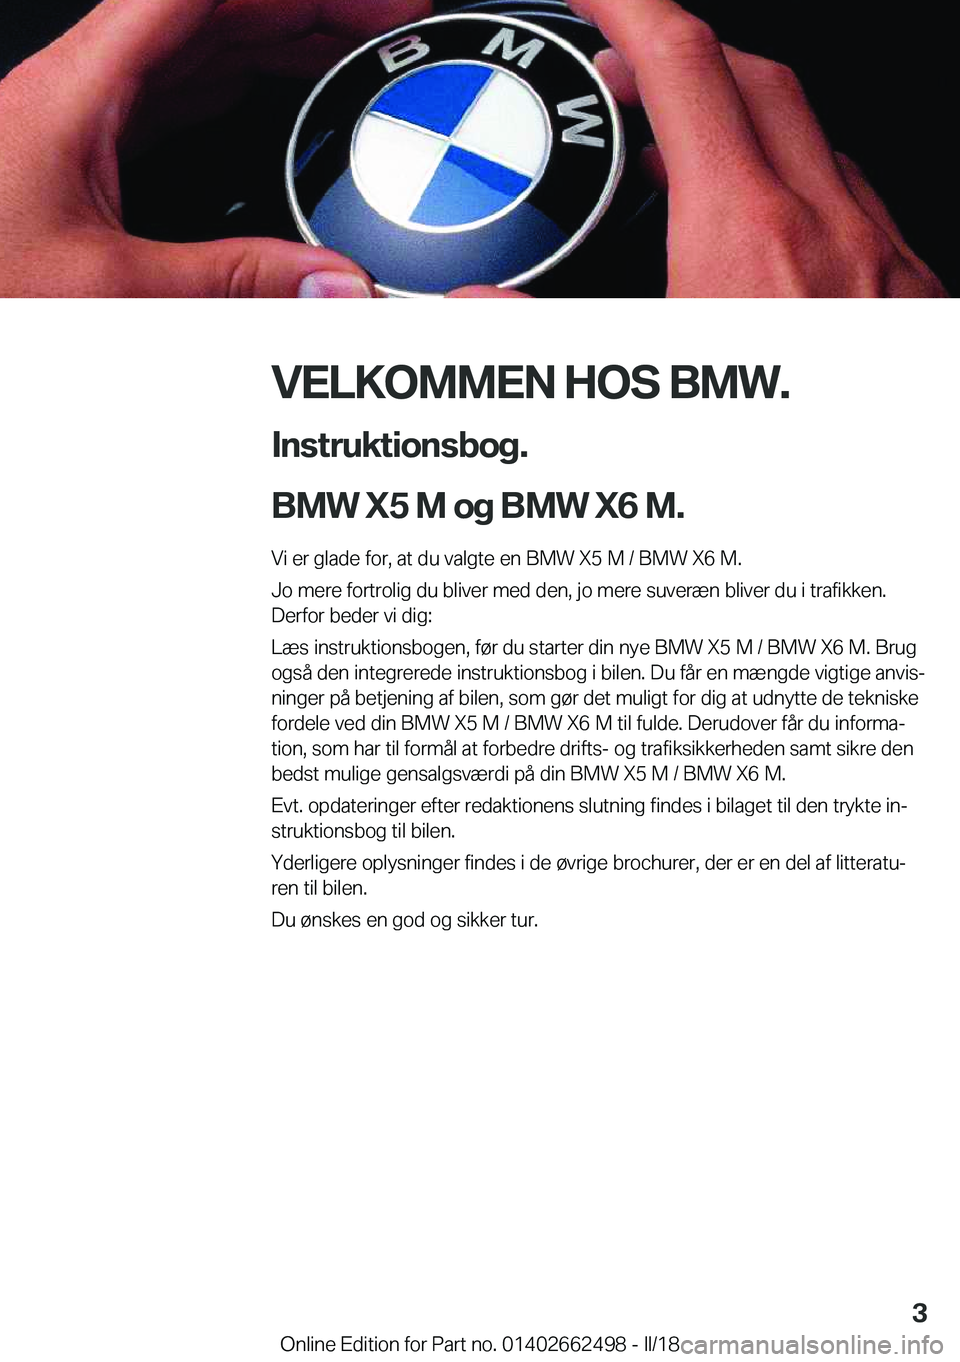 BMW X5 M 2018  InstruktionsbØger (in Danish) �V�E�L�K�O�M�M�E�N��H�O�S��B�M�W�.
�I�n�s�t�r�u�k�t�i�o�n�s�b�o�g�.
�B�M�W��X�5��M��o�g��B�M�W��X�6��M�.
�V�i� �e�r� �g�l�a�d�e� �f�o�r�,� �a�t� �d�u� �v�a�l�g�t�e� �e�n� �B�M�W� �X�5� �M� �/�